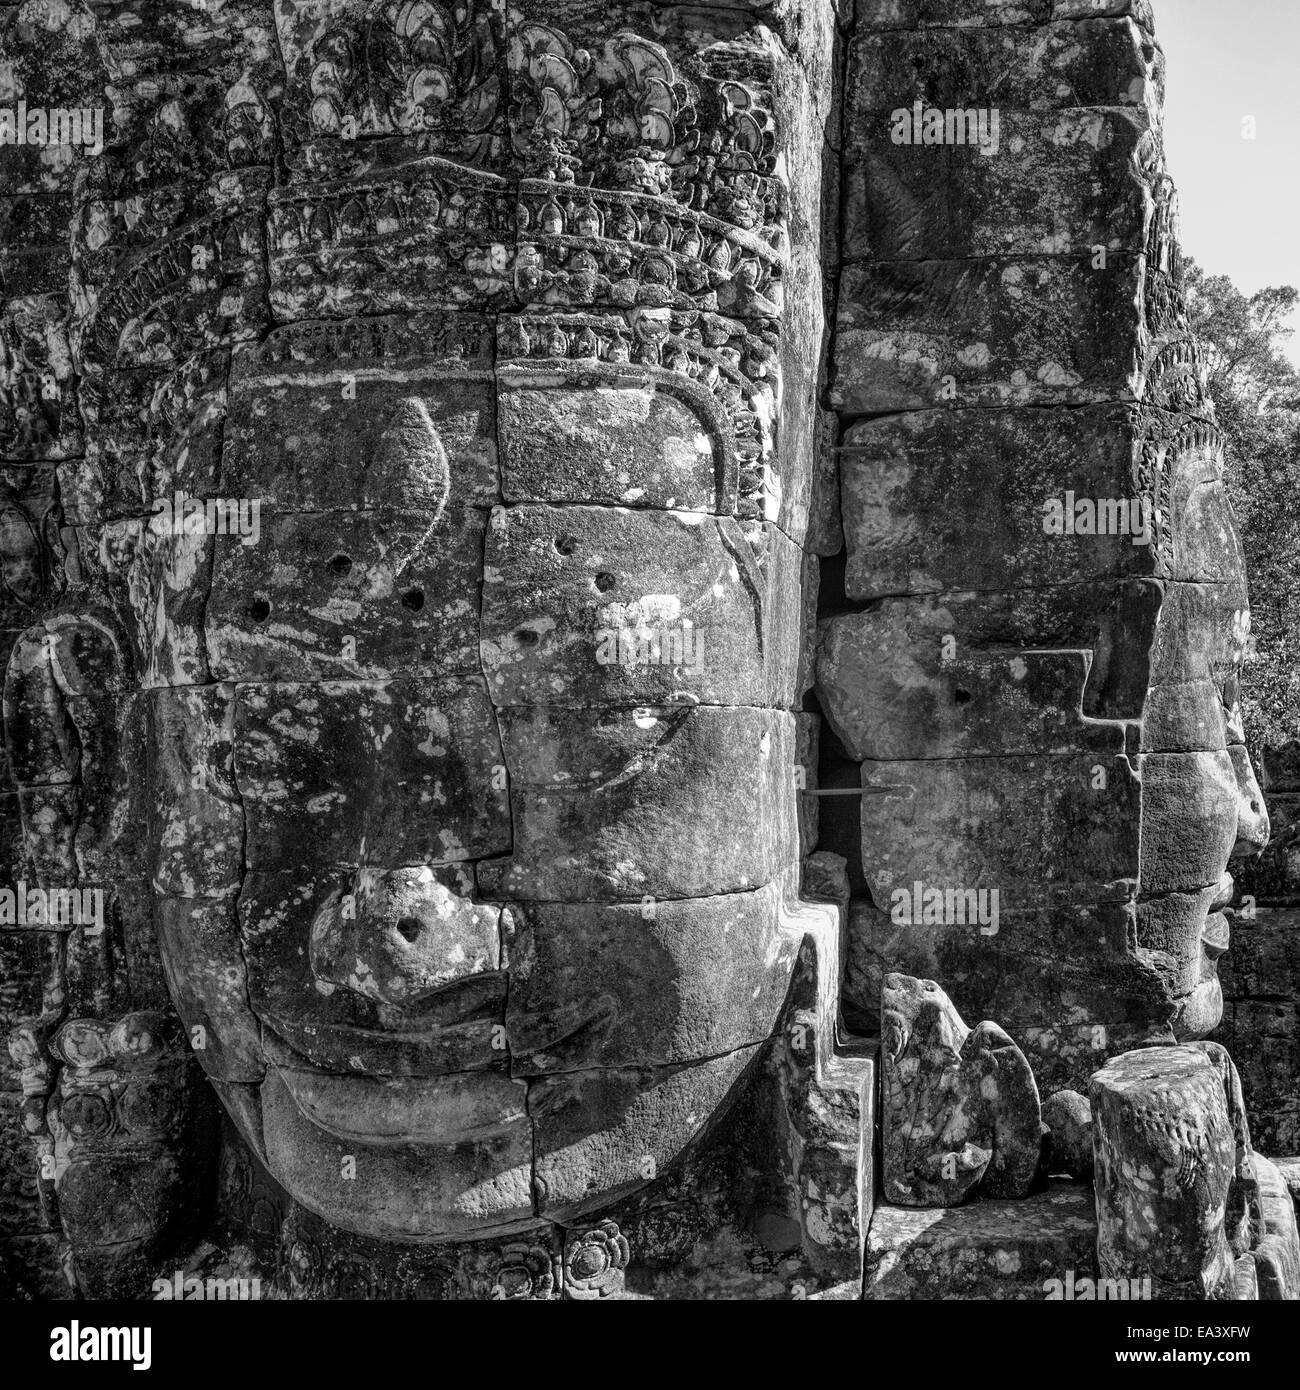 Angkor Archaeological Park Stock Photo